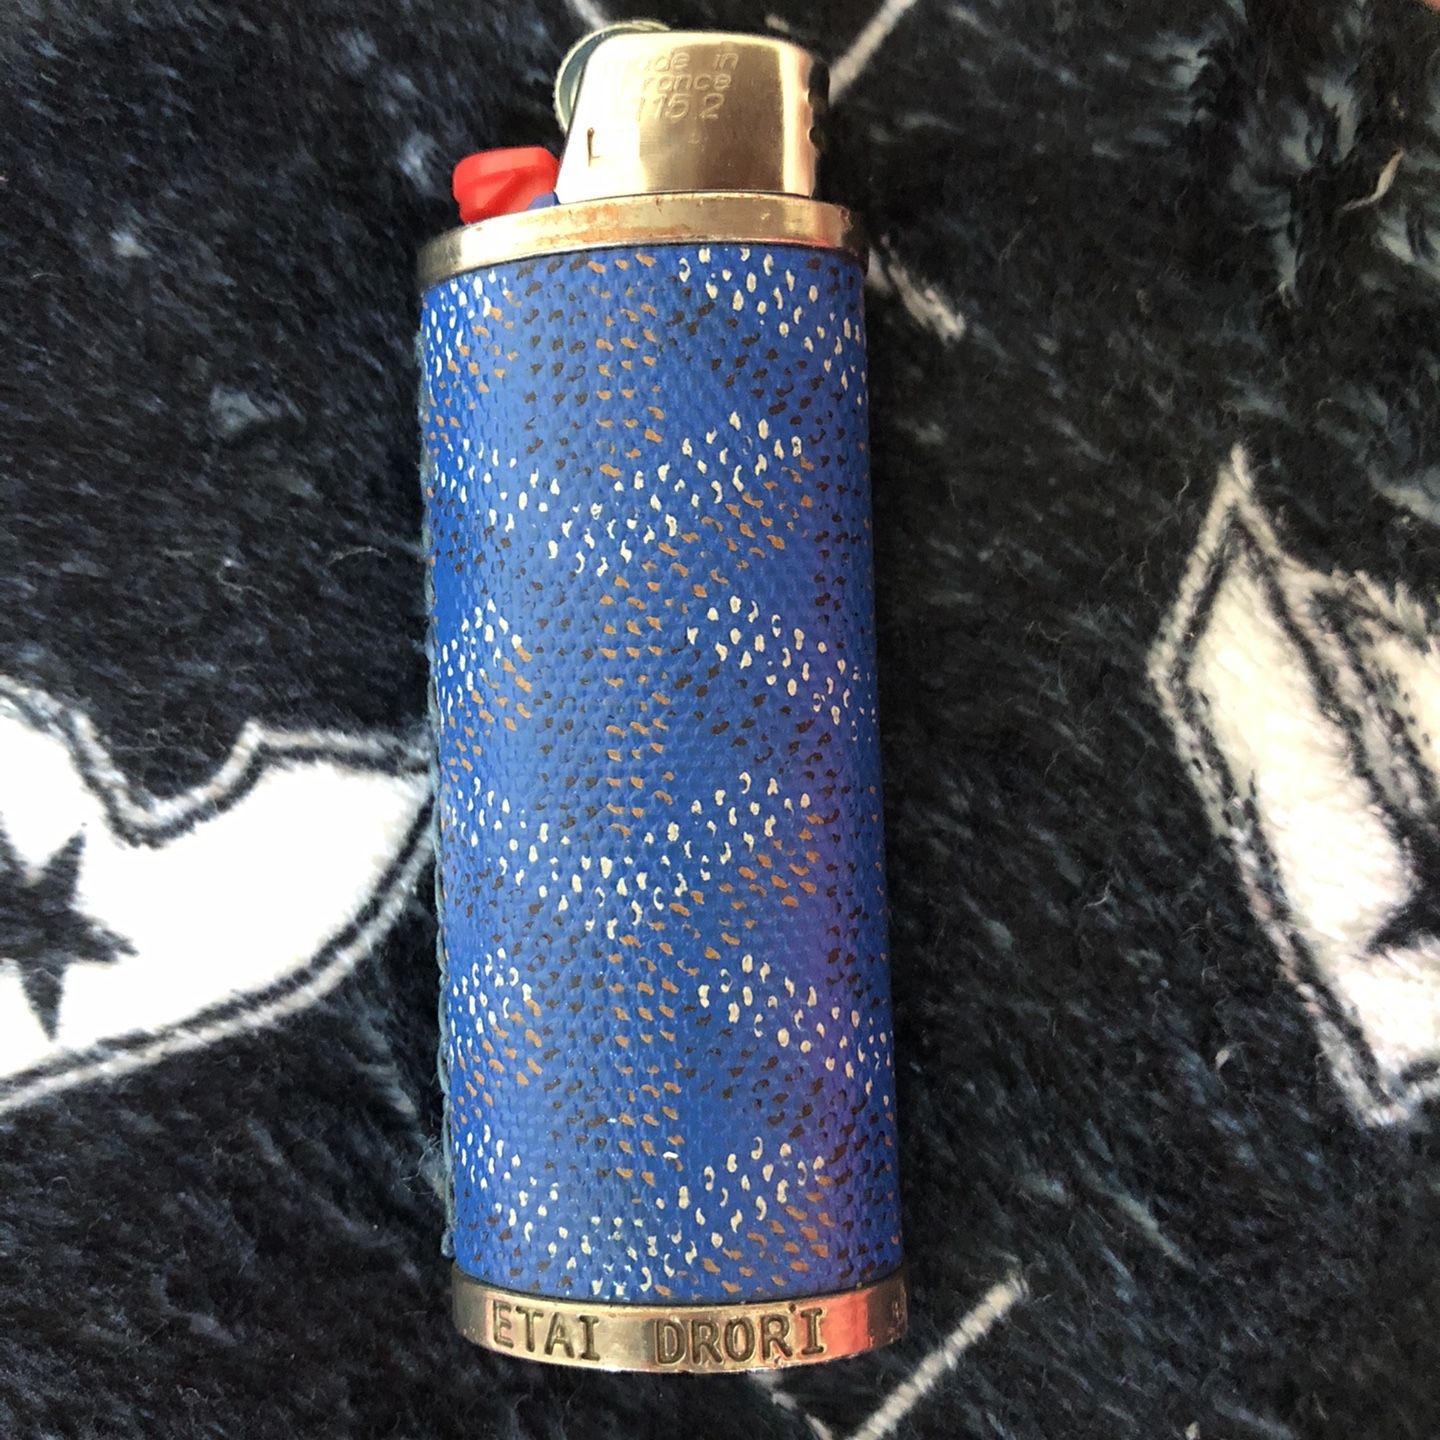 Etai Drori Louis Vuitton lighter for Sale in Lake Forest, CA - OfferUp